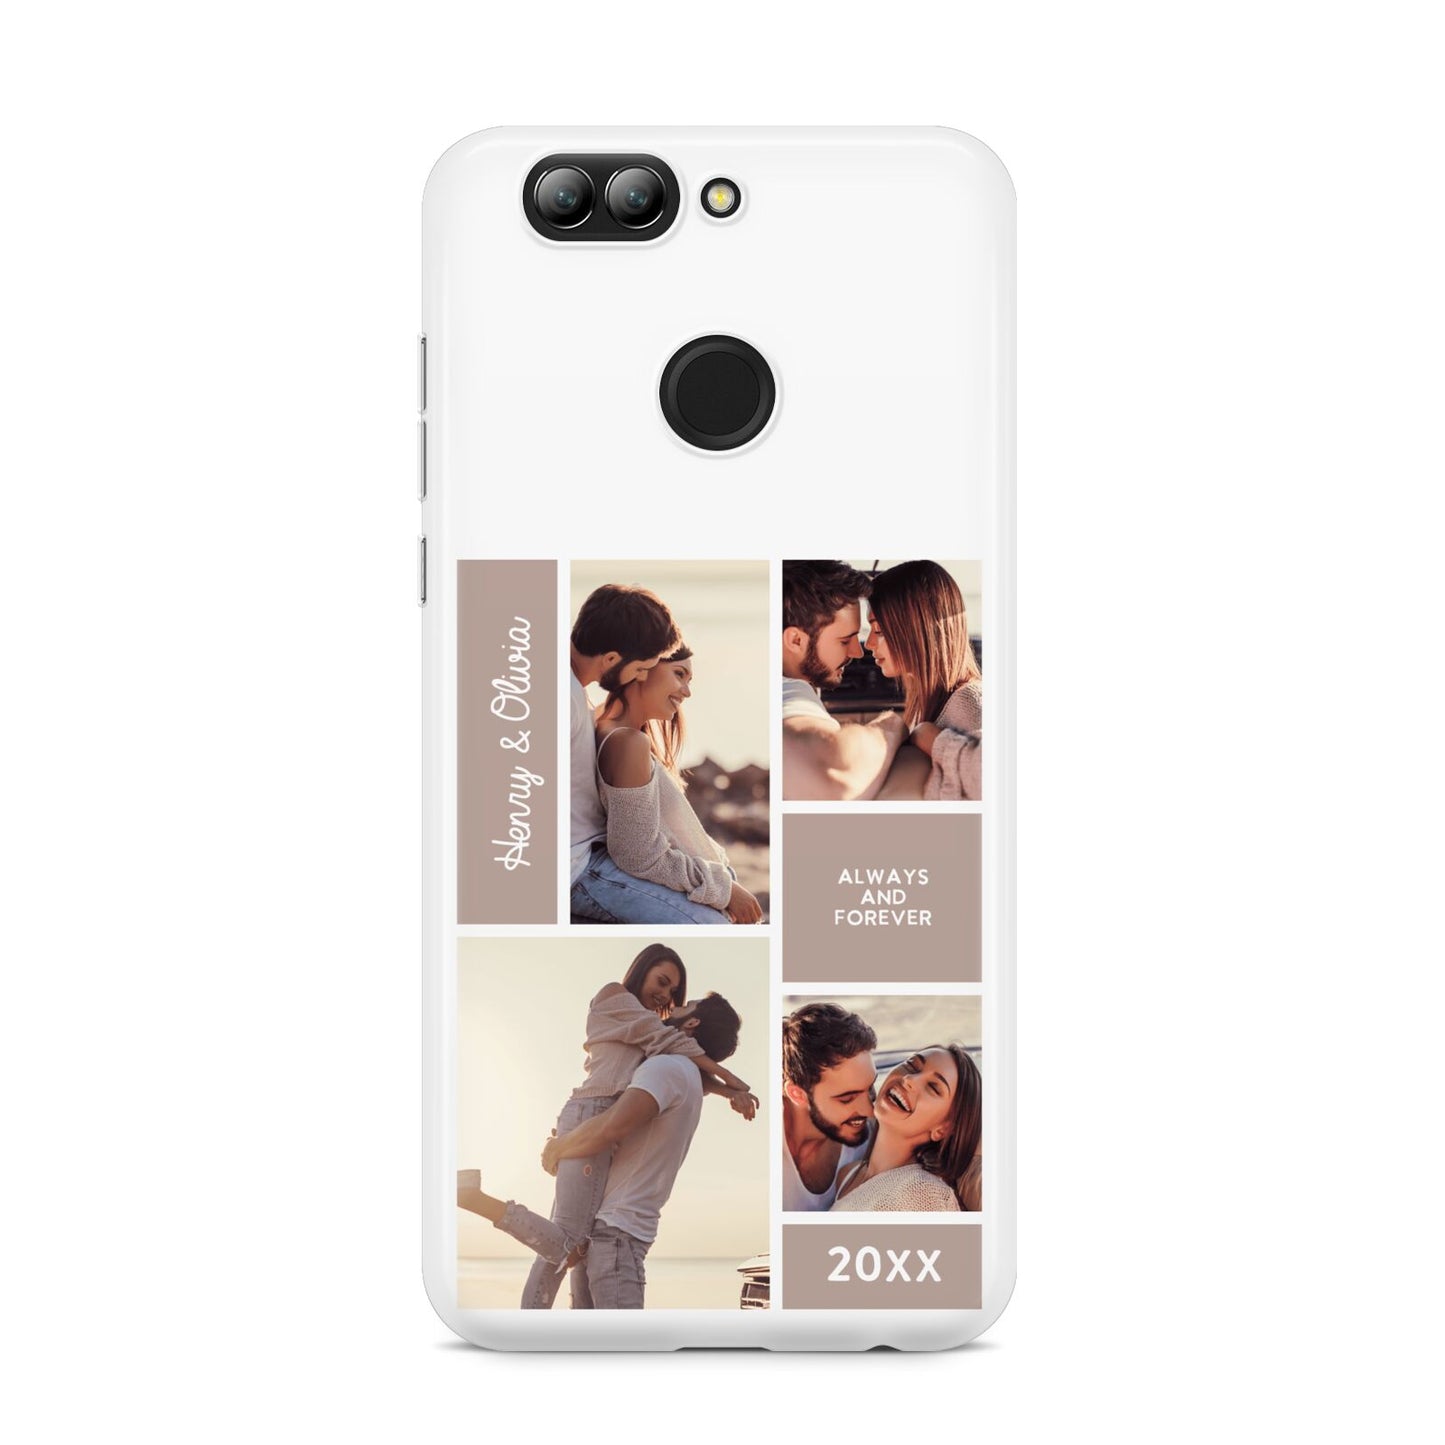 Couples Valentine Photo Collage Personalised Huawei Nova 2s Phone Case